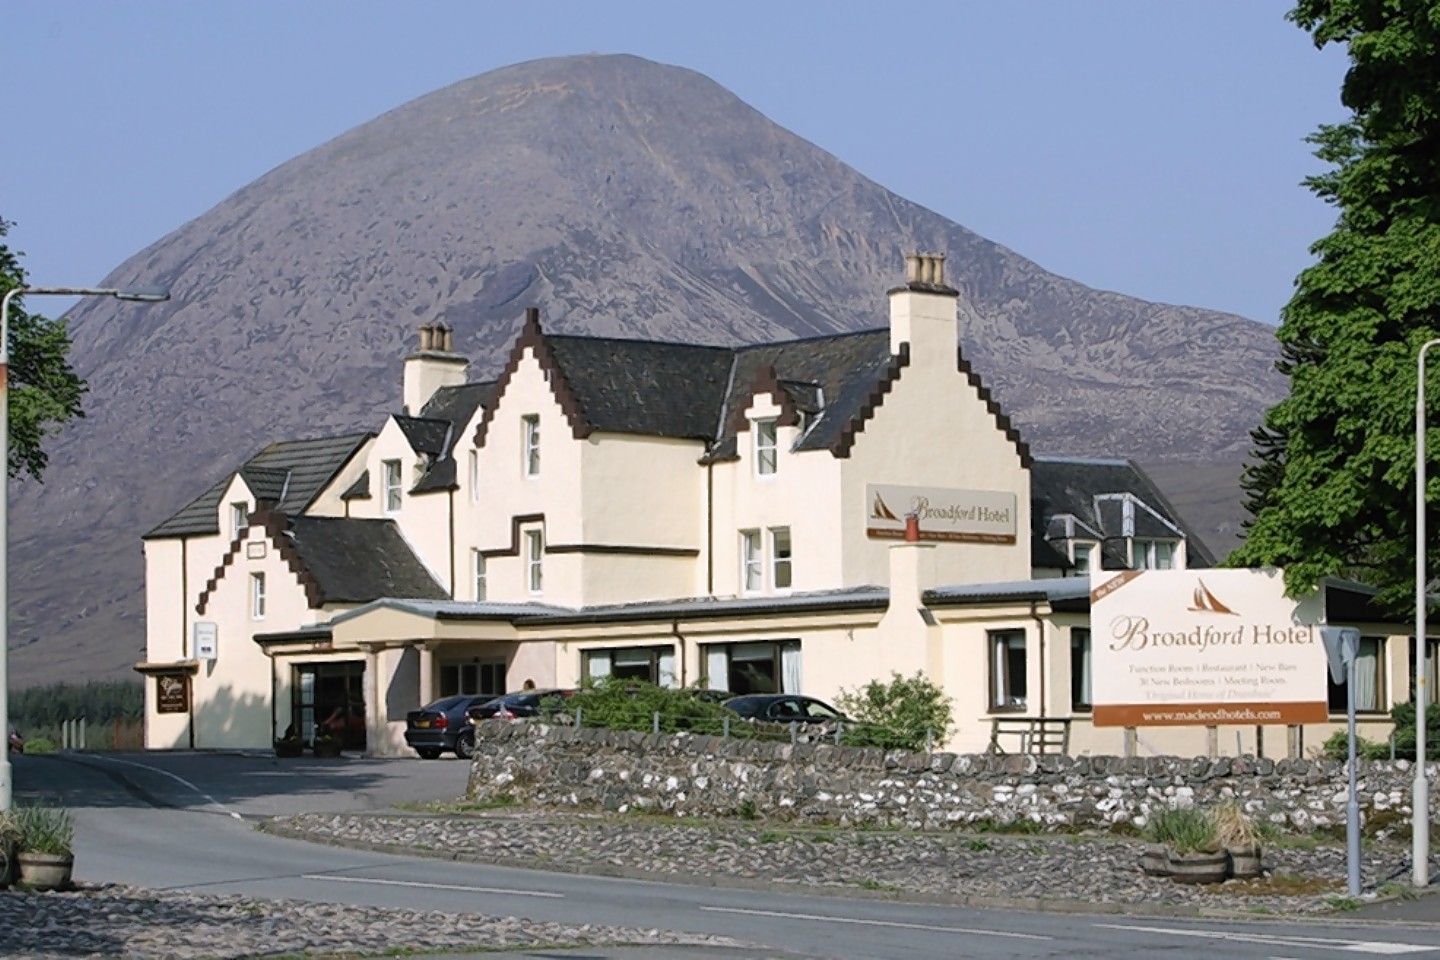 The Broadford Hotel on Skye